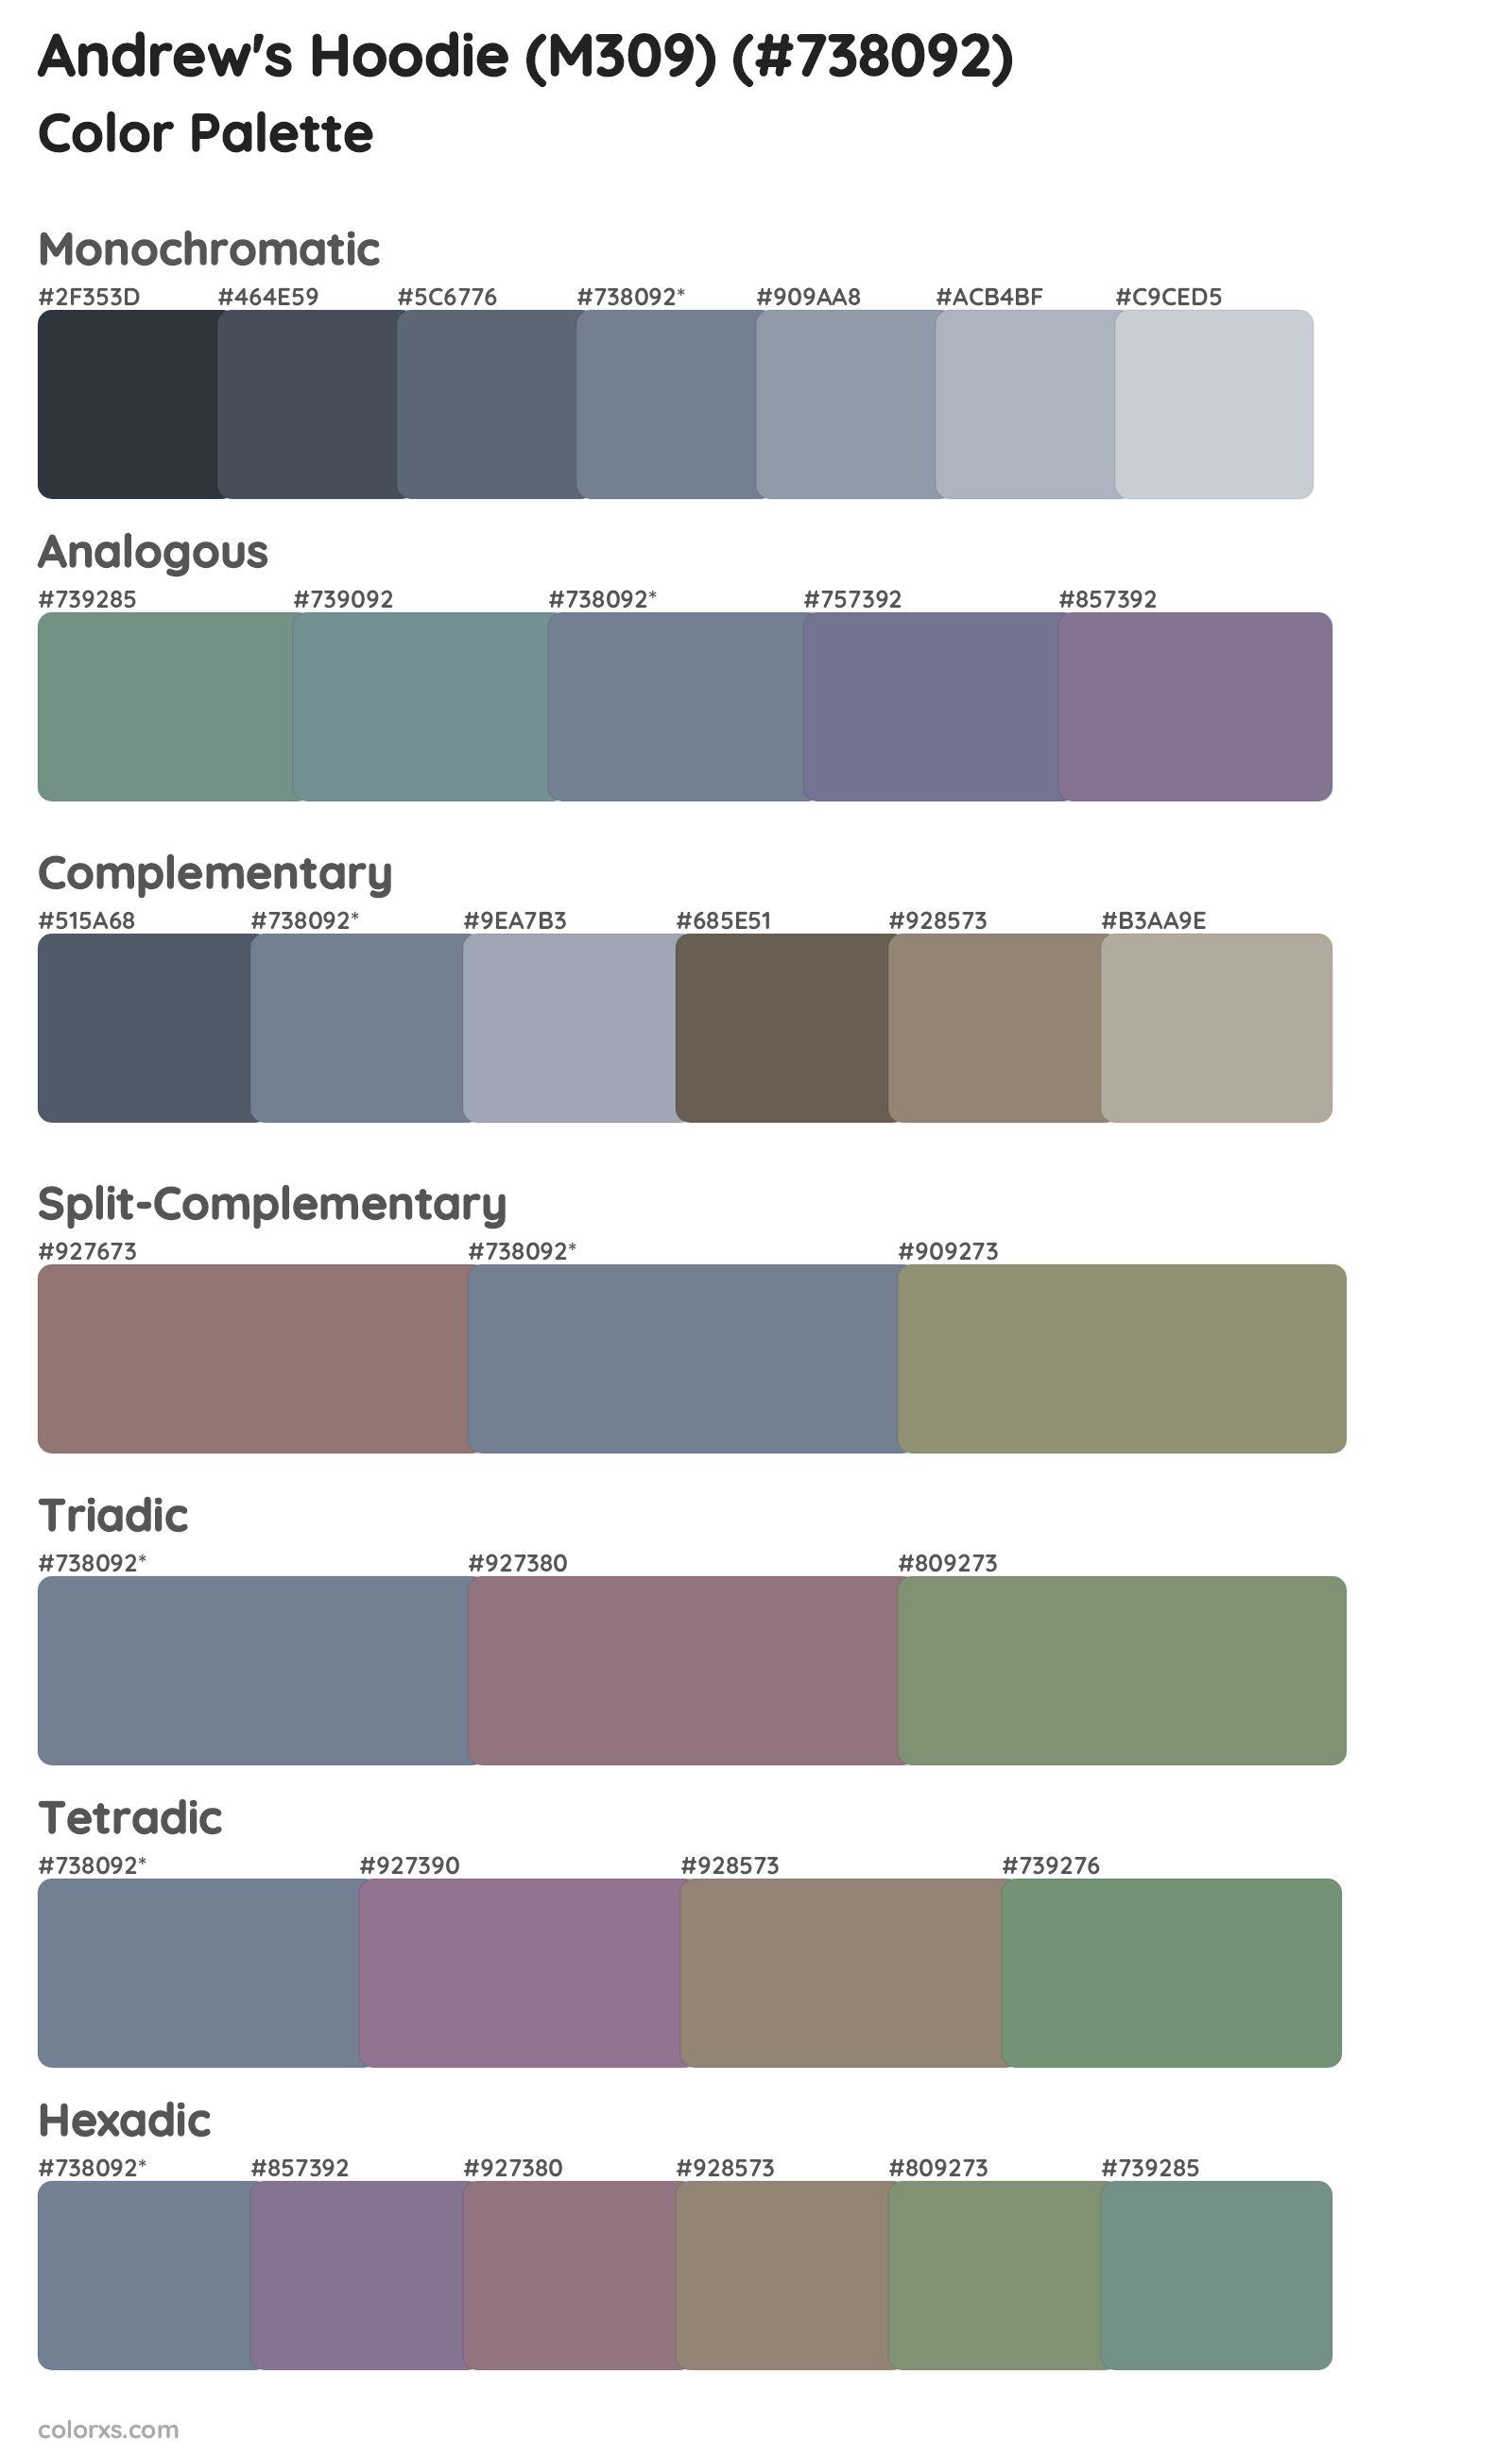 Andrew's Hoodie (M309) Color Scheme Palettes